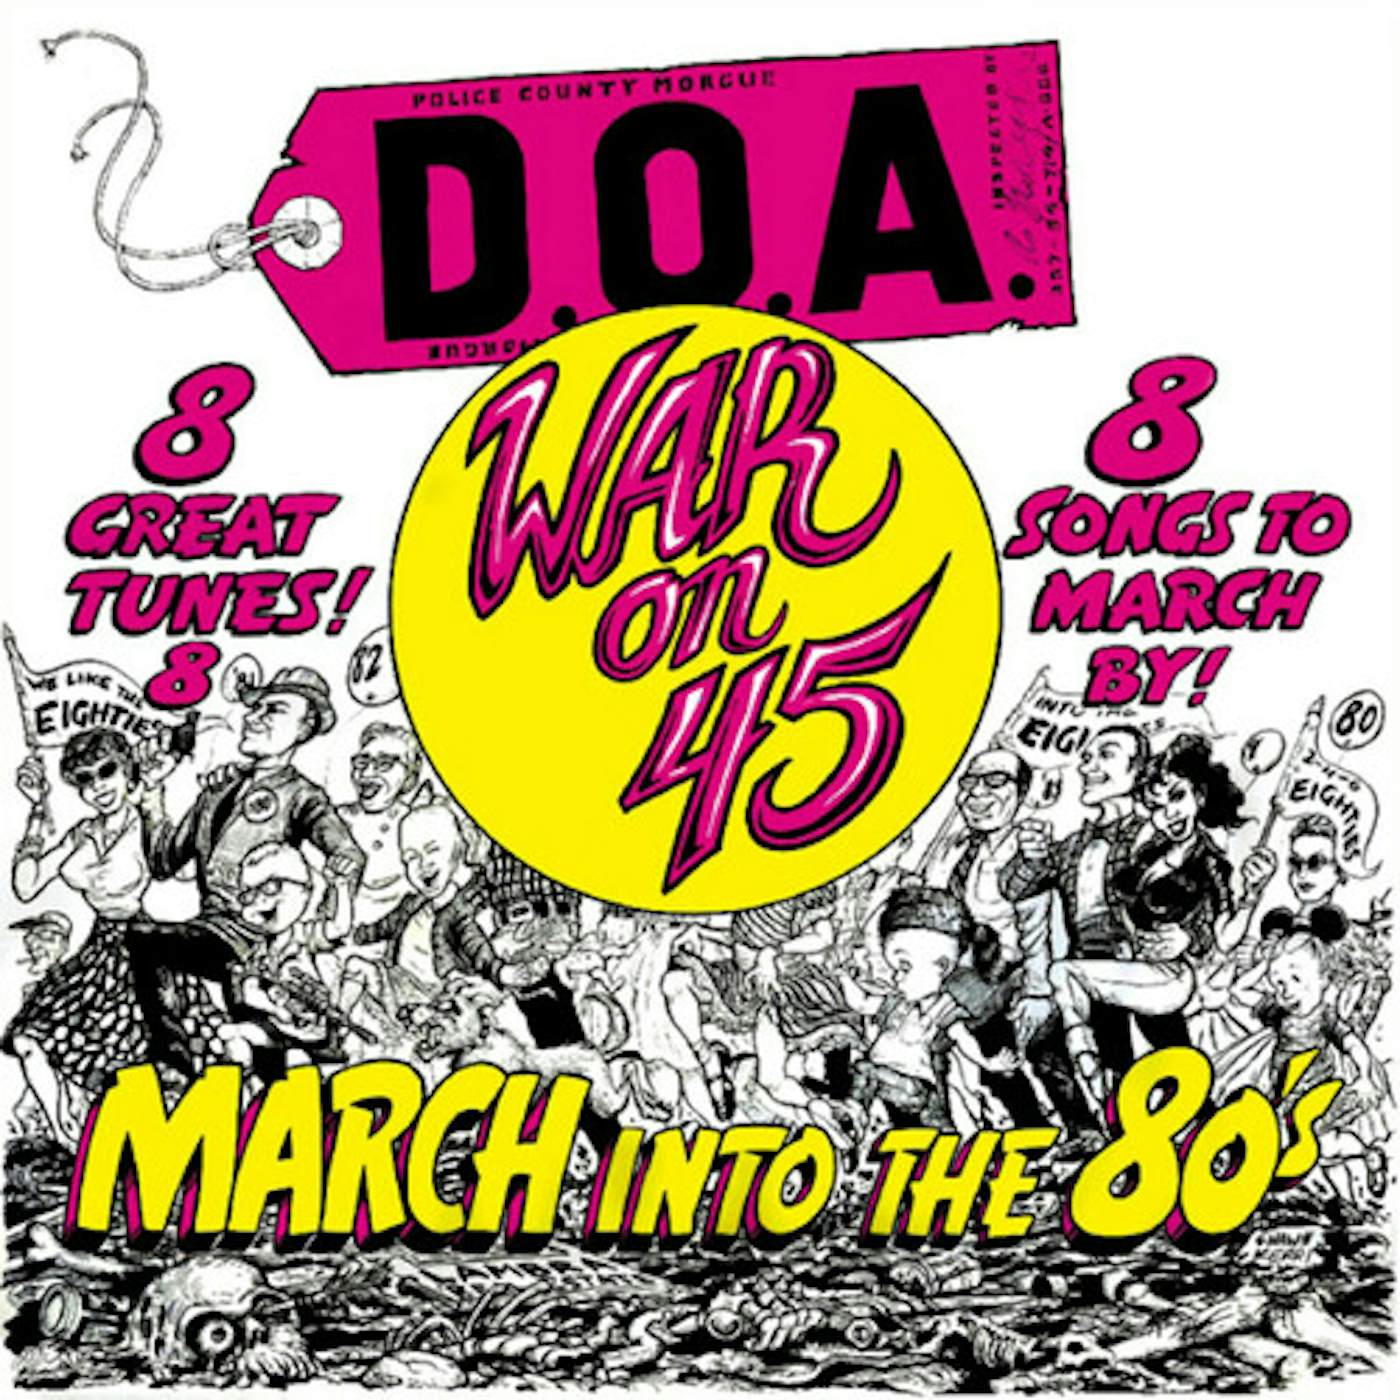 D.O.A. WAR ON 45 - 40TH ANNIVERSARY Vinyl Record